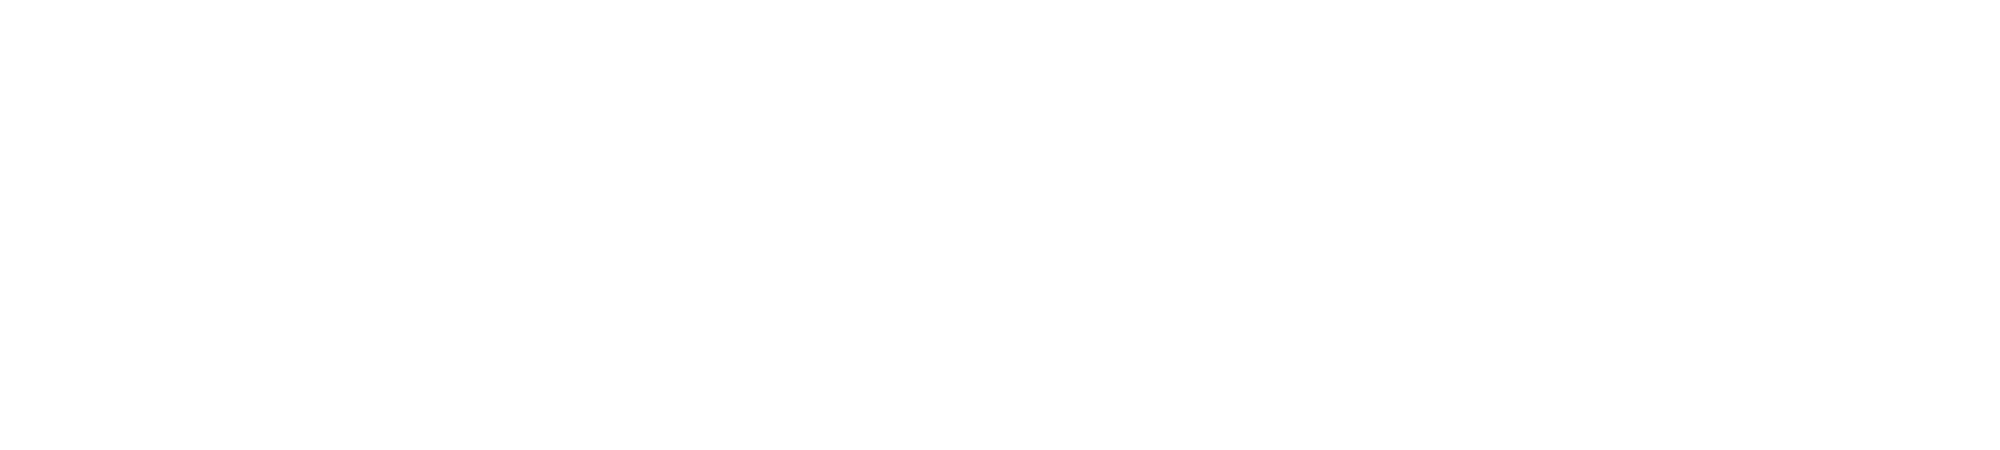 Gamma new logo